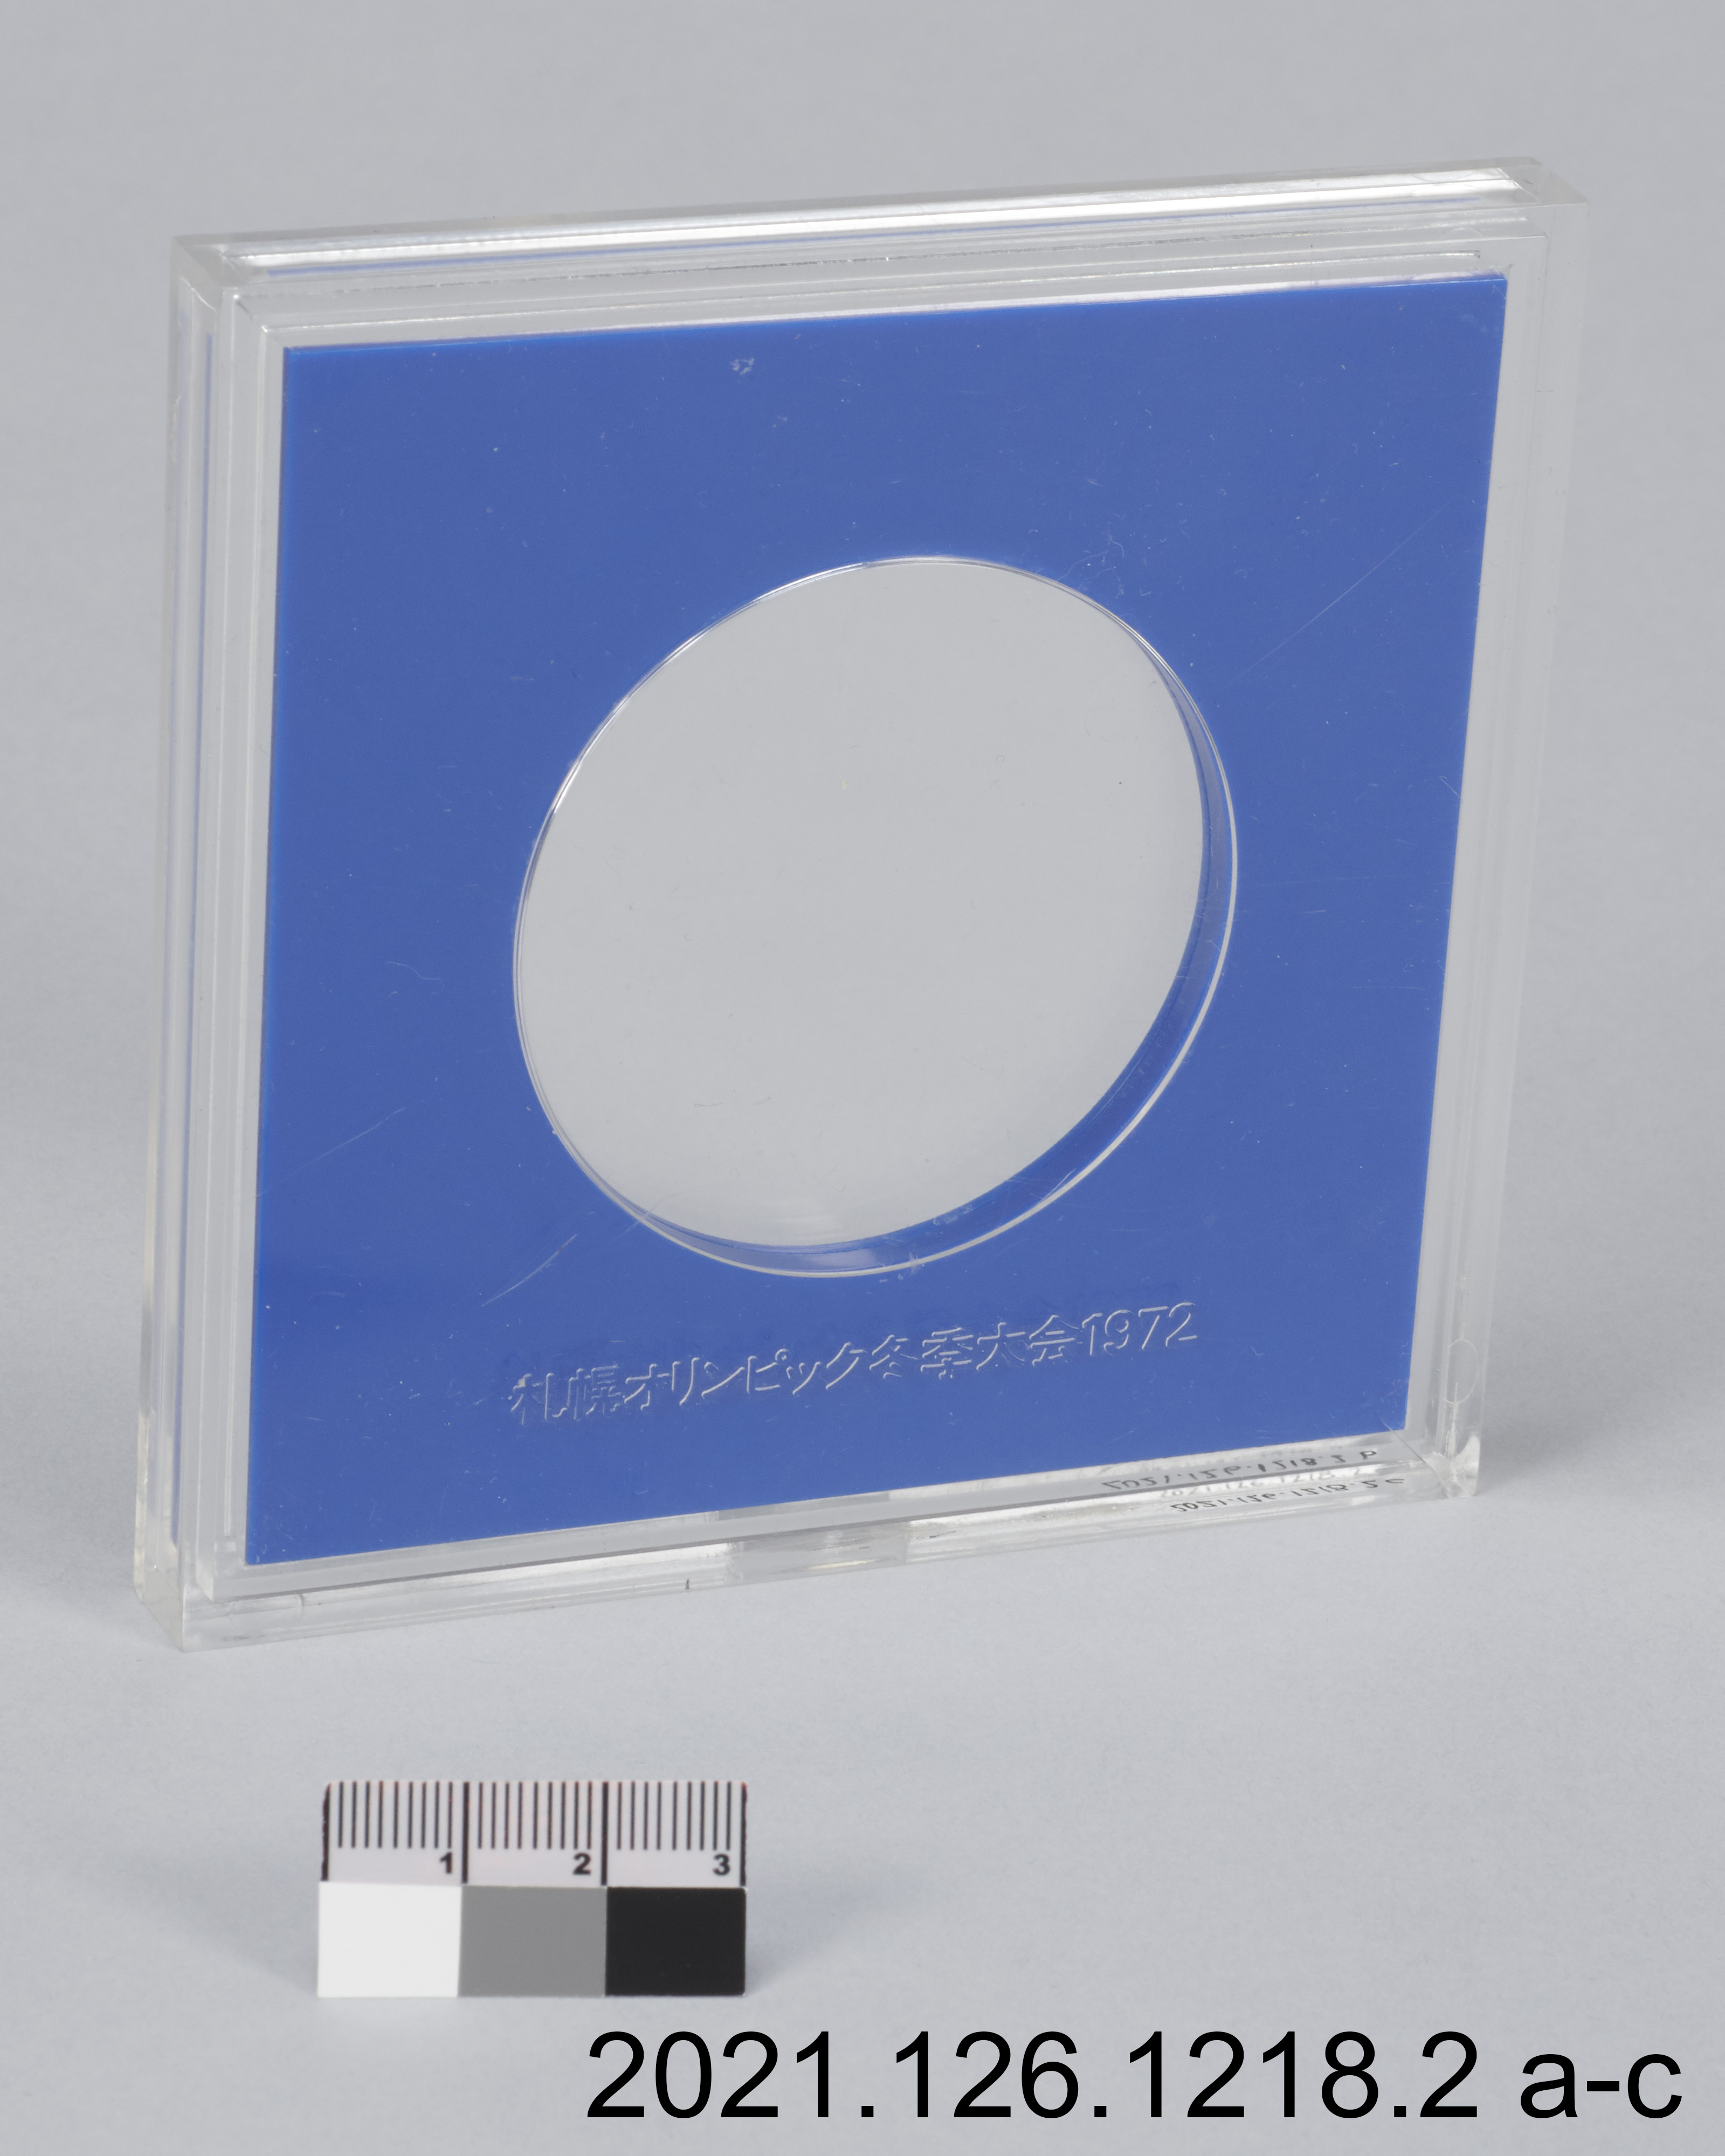 Frozen Lines Transparent Adhesive Fish Measuring Tape Sticker I 36